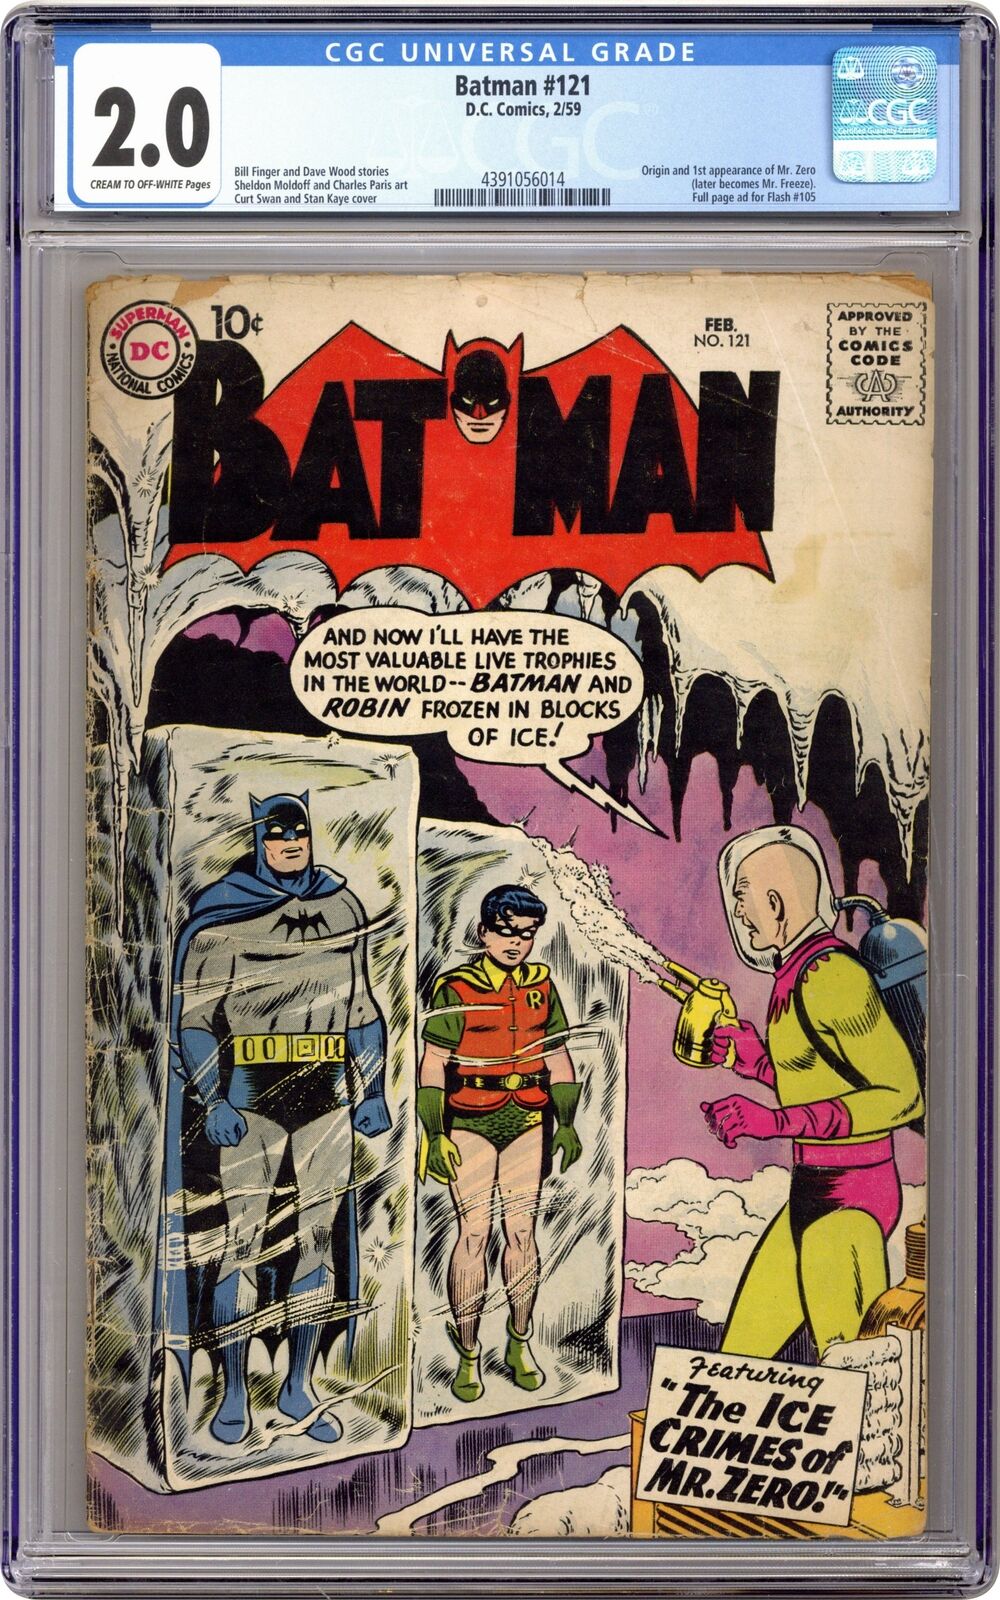 Batman #121 CGC 2.0 1959 4391056014 1st app. Mr. Freeze